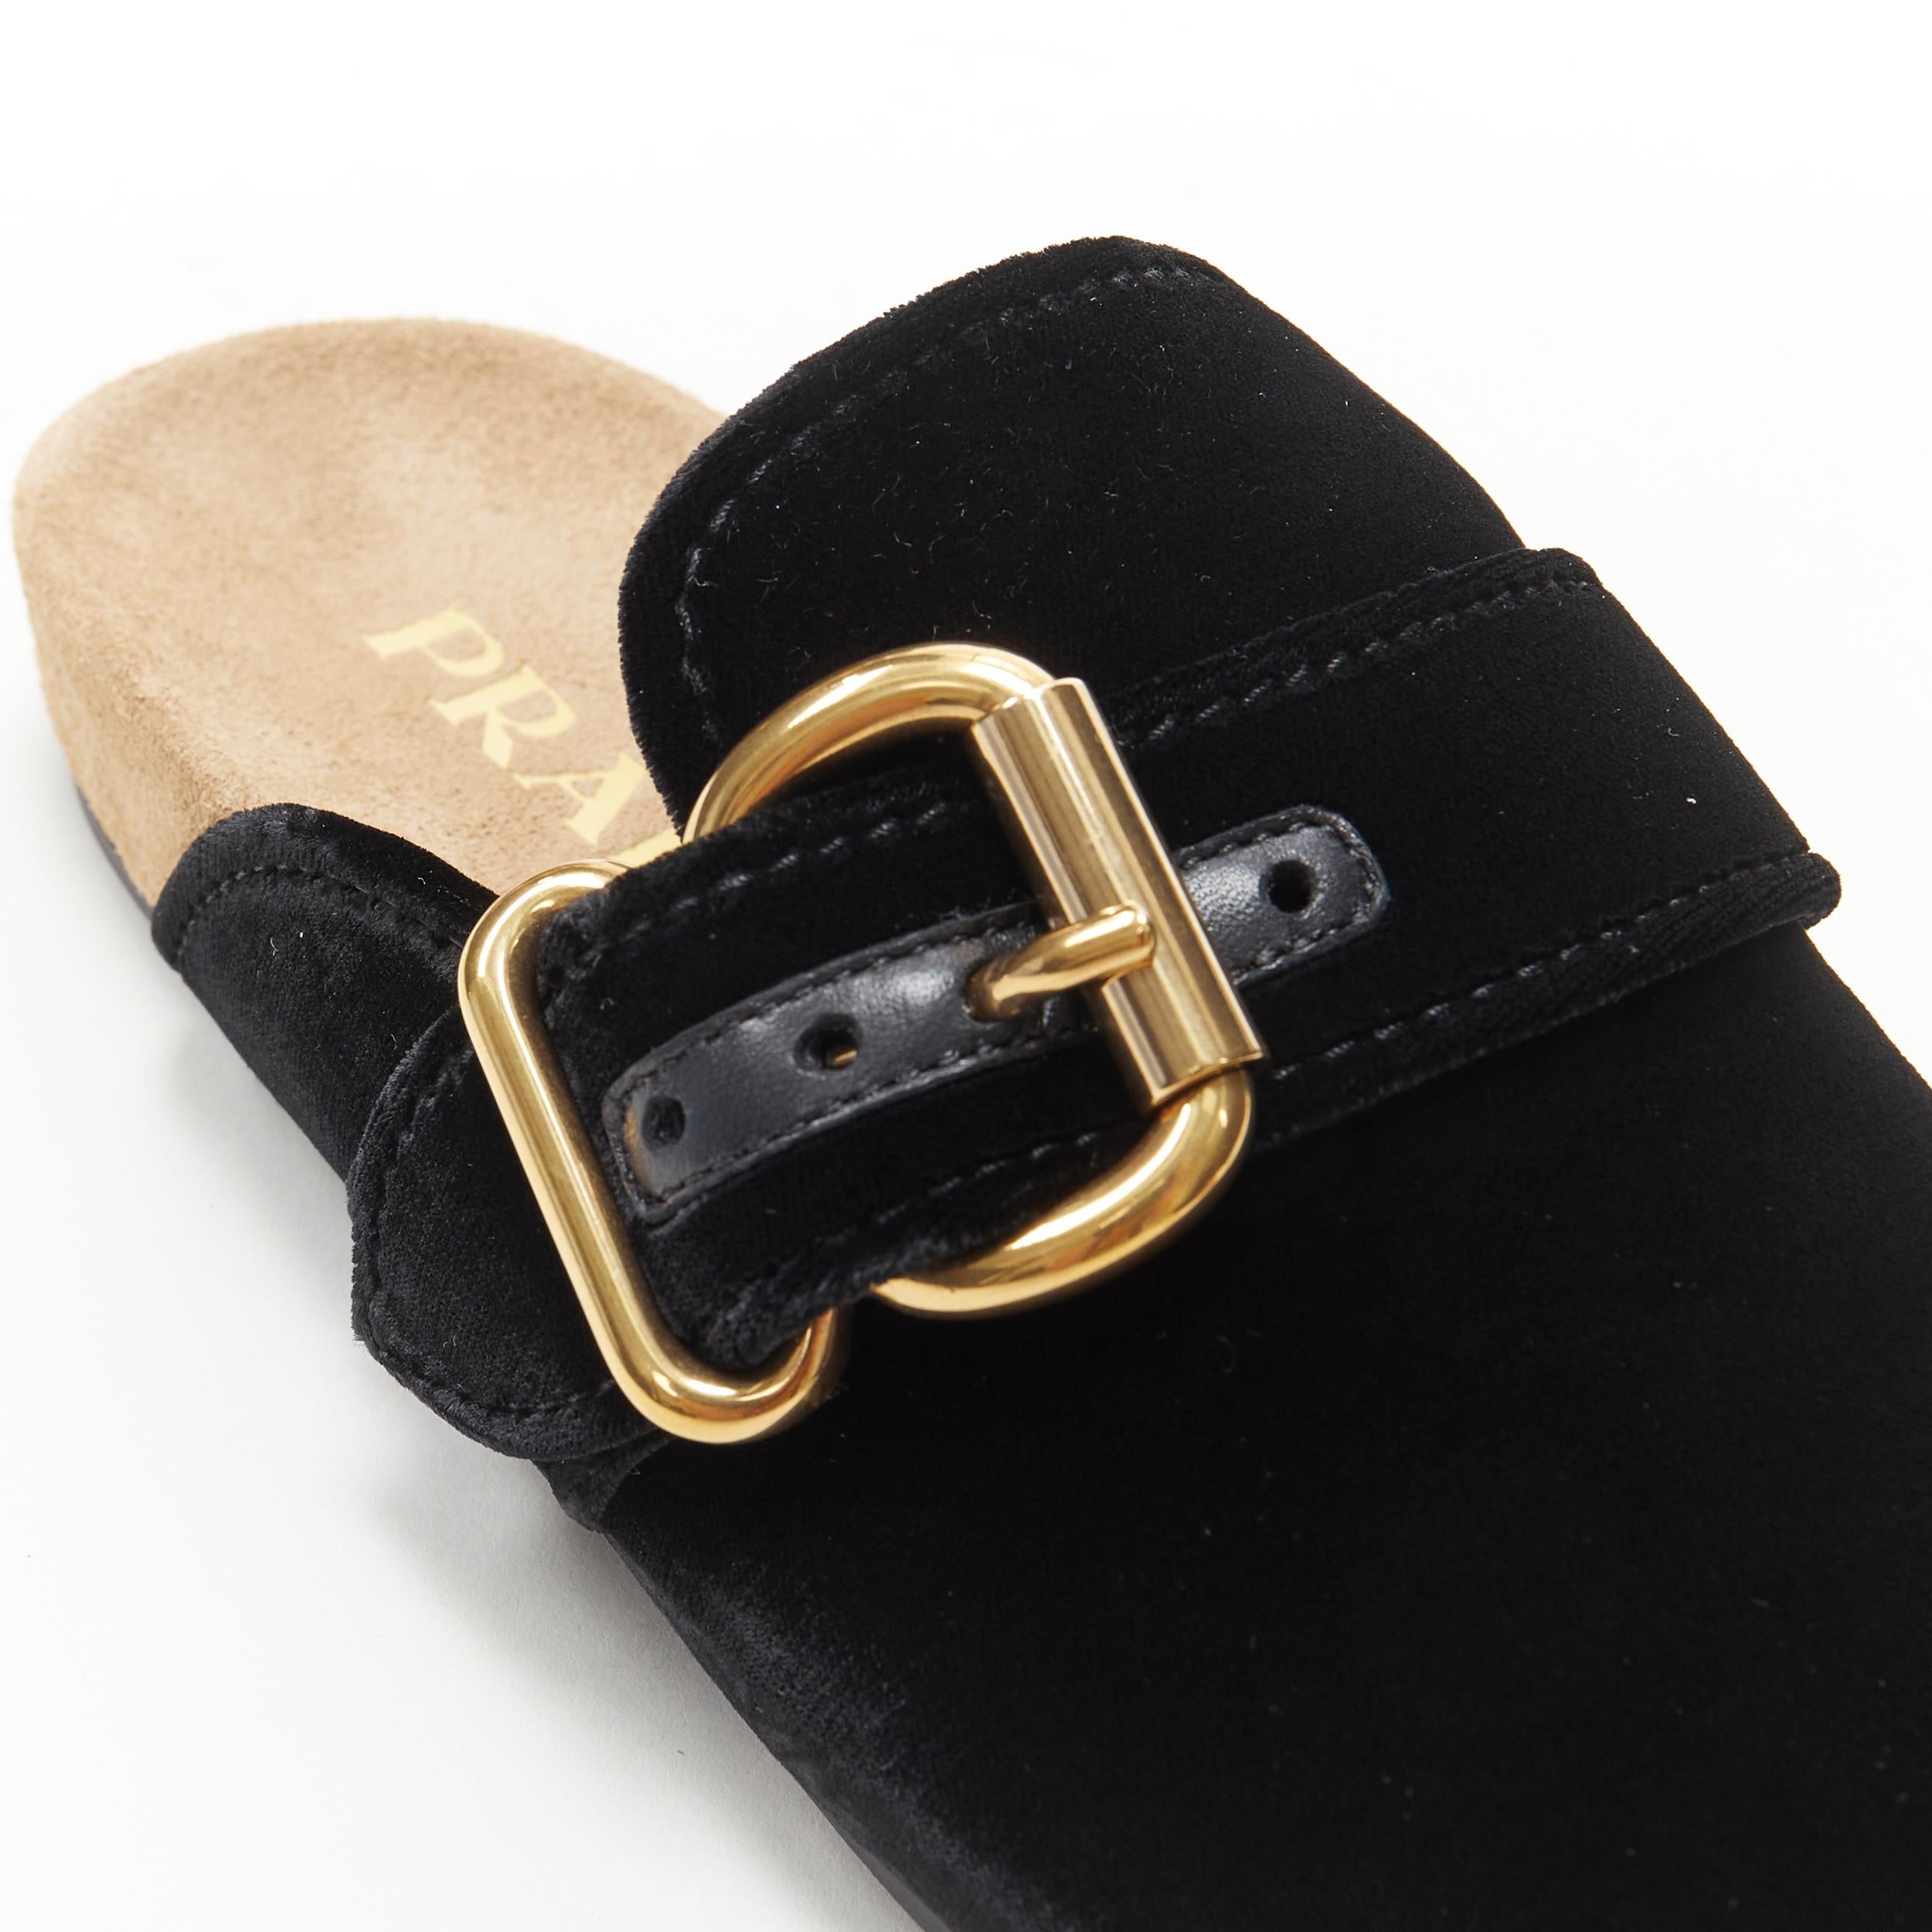 Women's new PRADA 2018 black velvet gold buckle round toe mule clog birkenstock EU36 US6